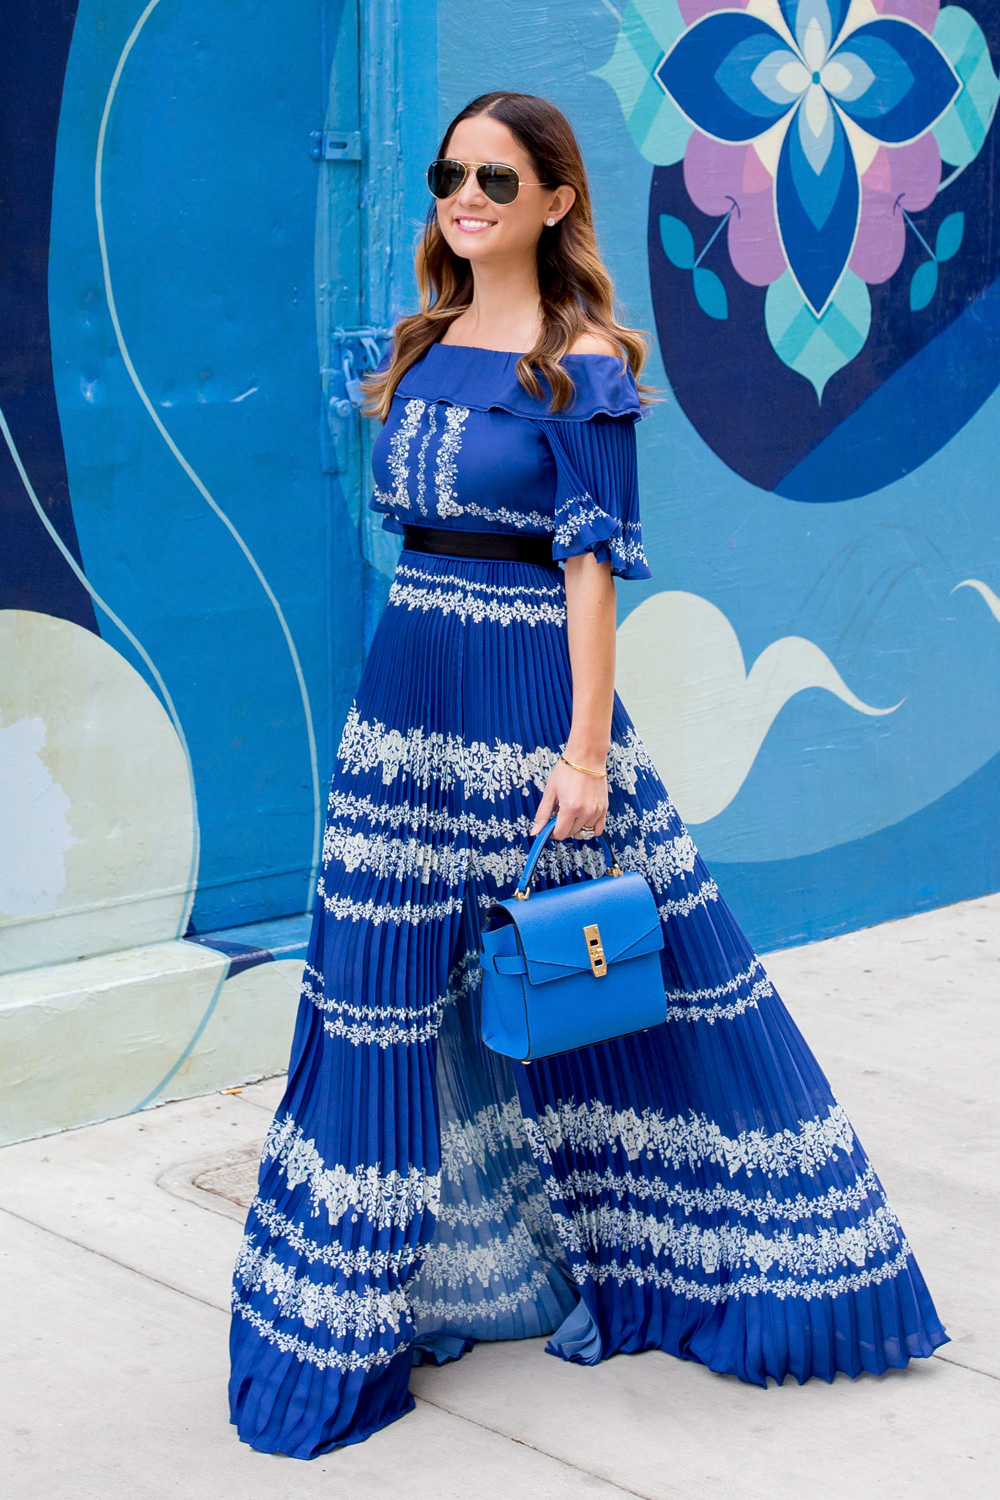 Jennifer Lake Style Charade walking in a blue pleated Self Portrait maxi dress, and blue Henri Bendel bag at a blue street art mural wall